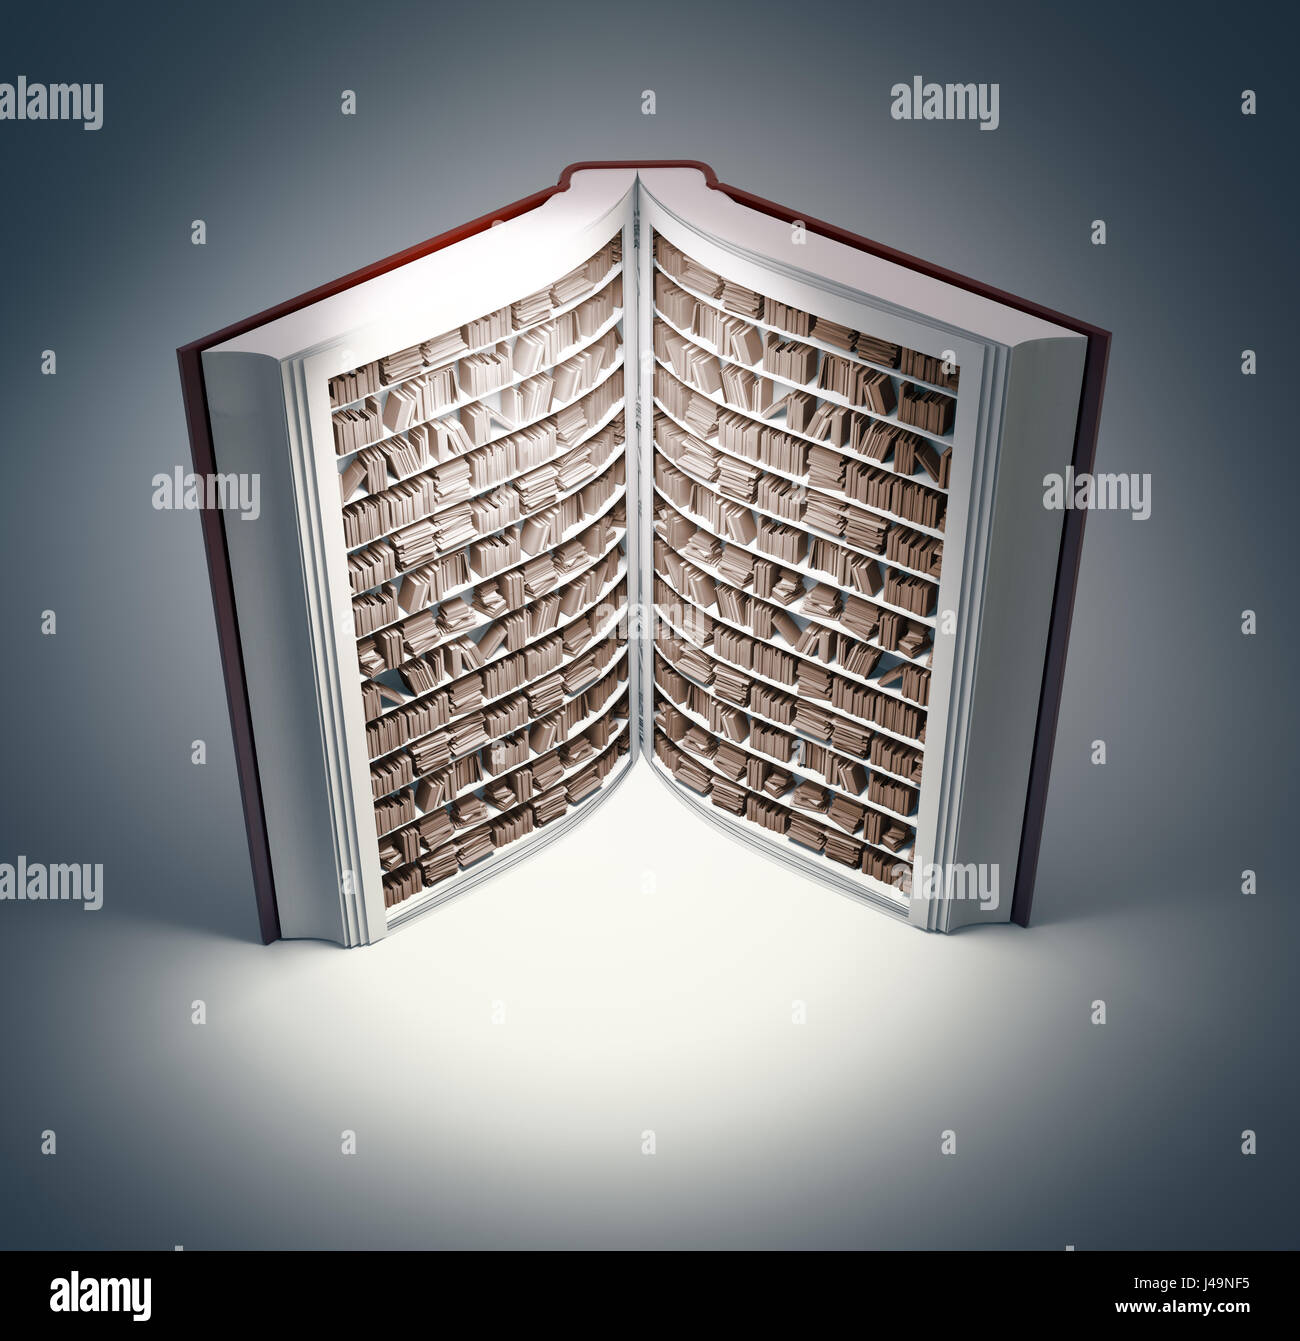 Book shaped bookshelf - 3d illustration Stock Photo